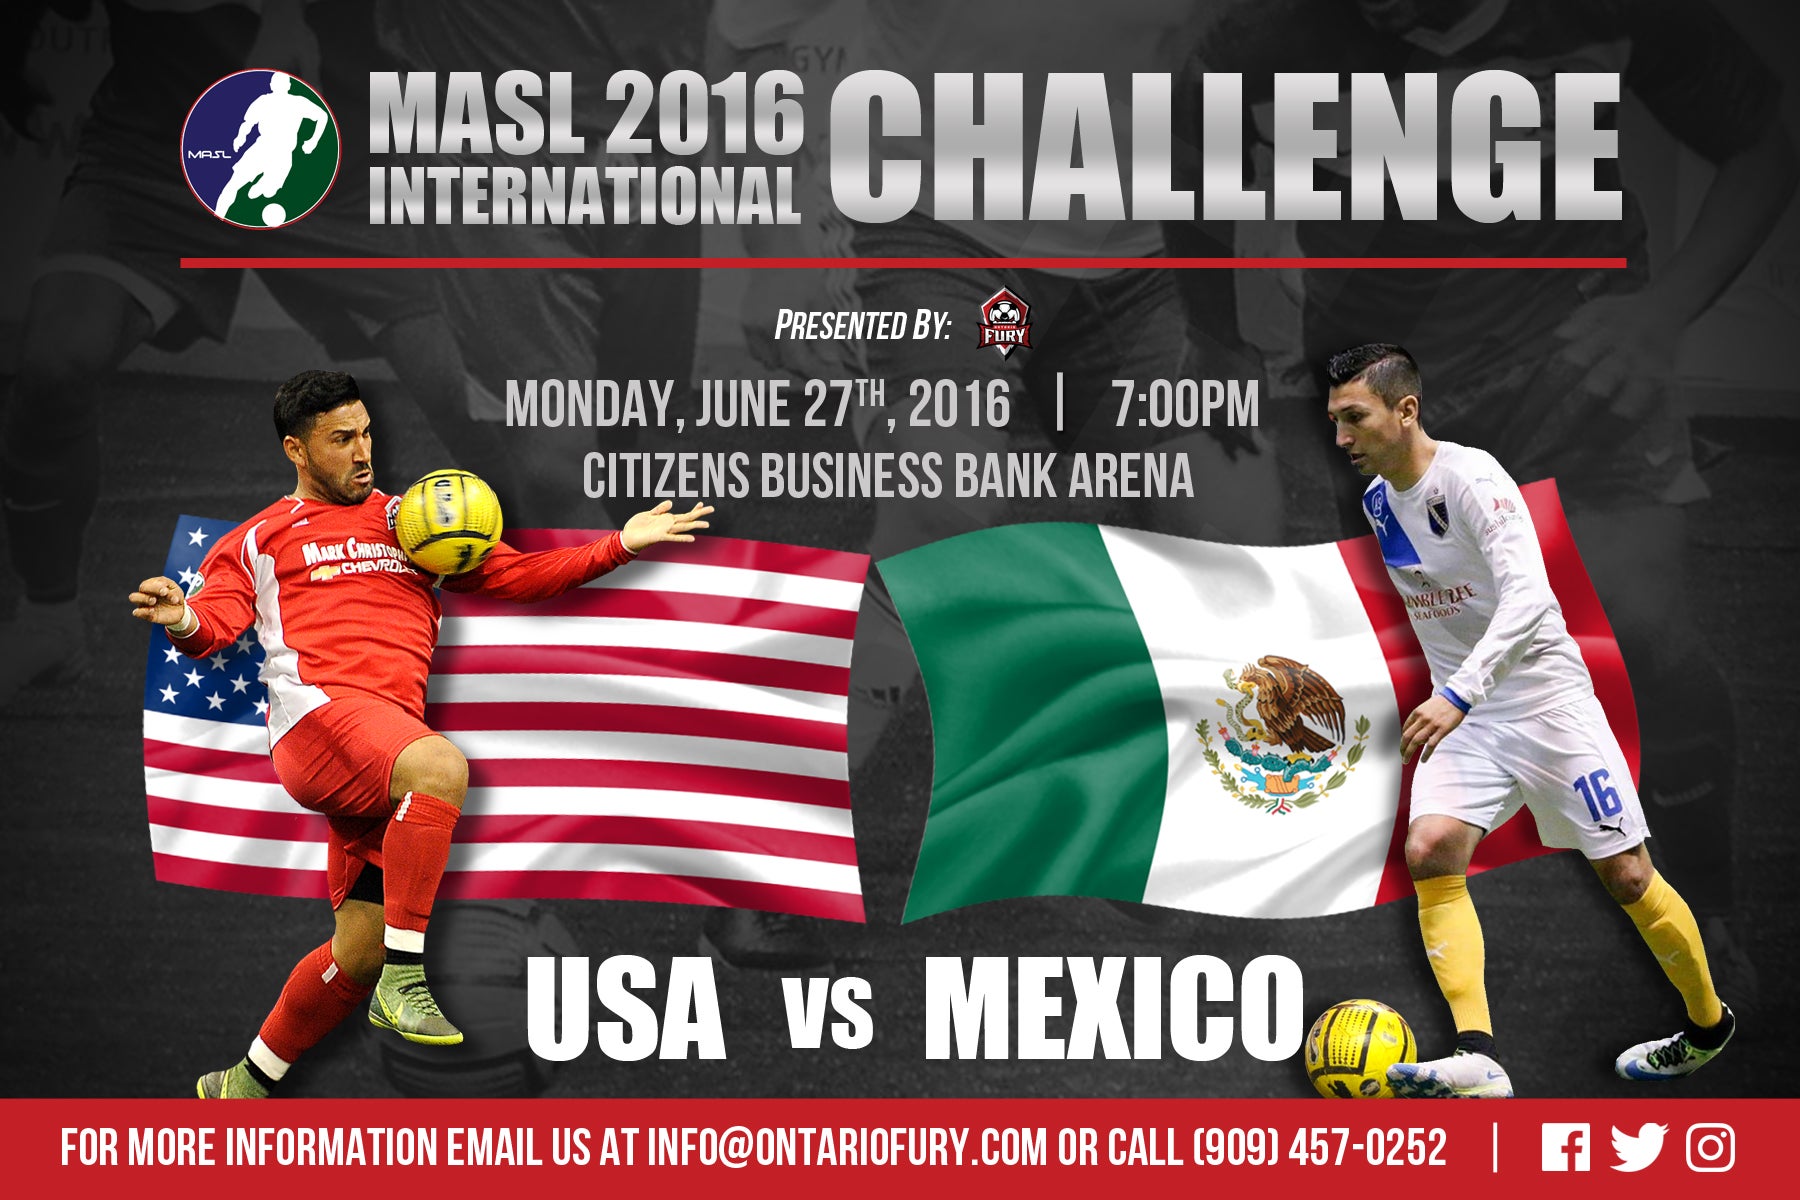 MASL 2016 International Challenge